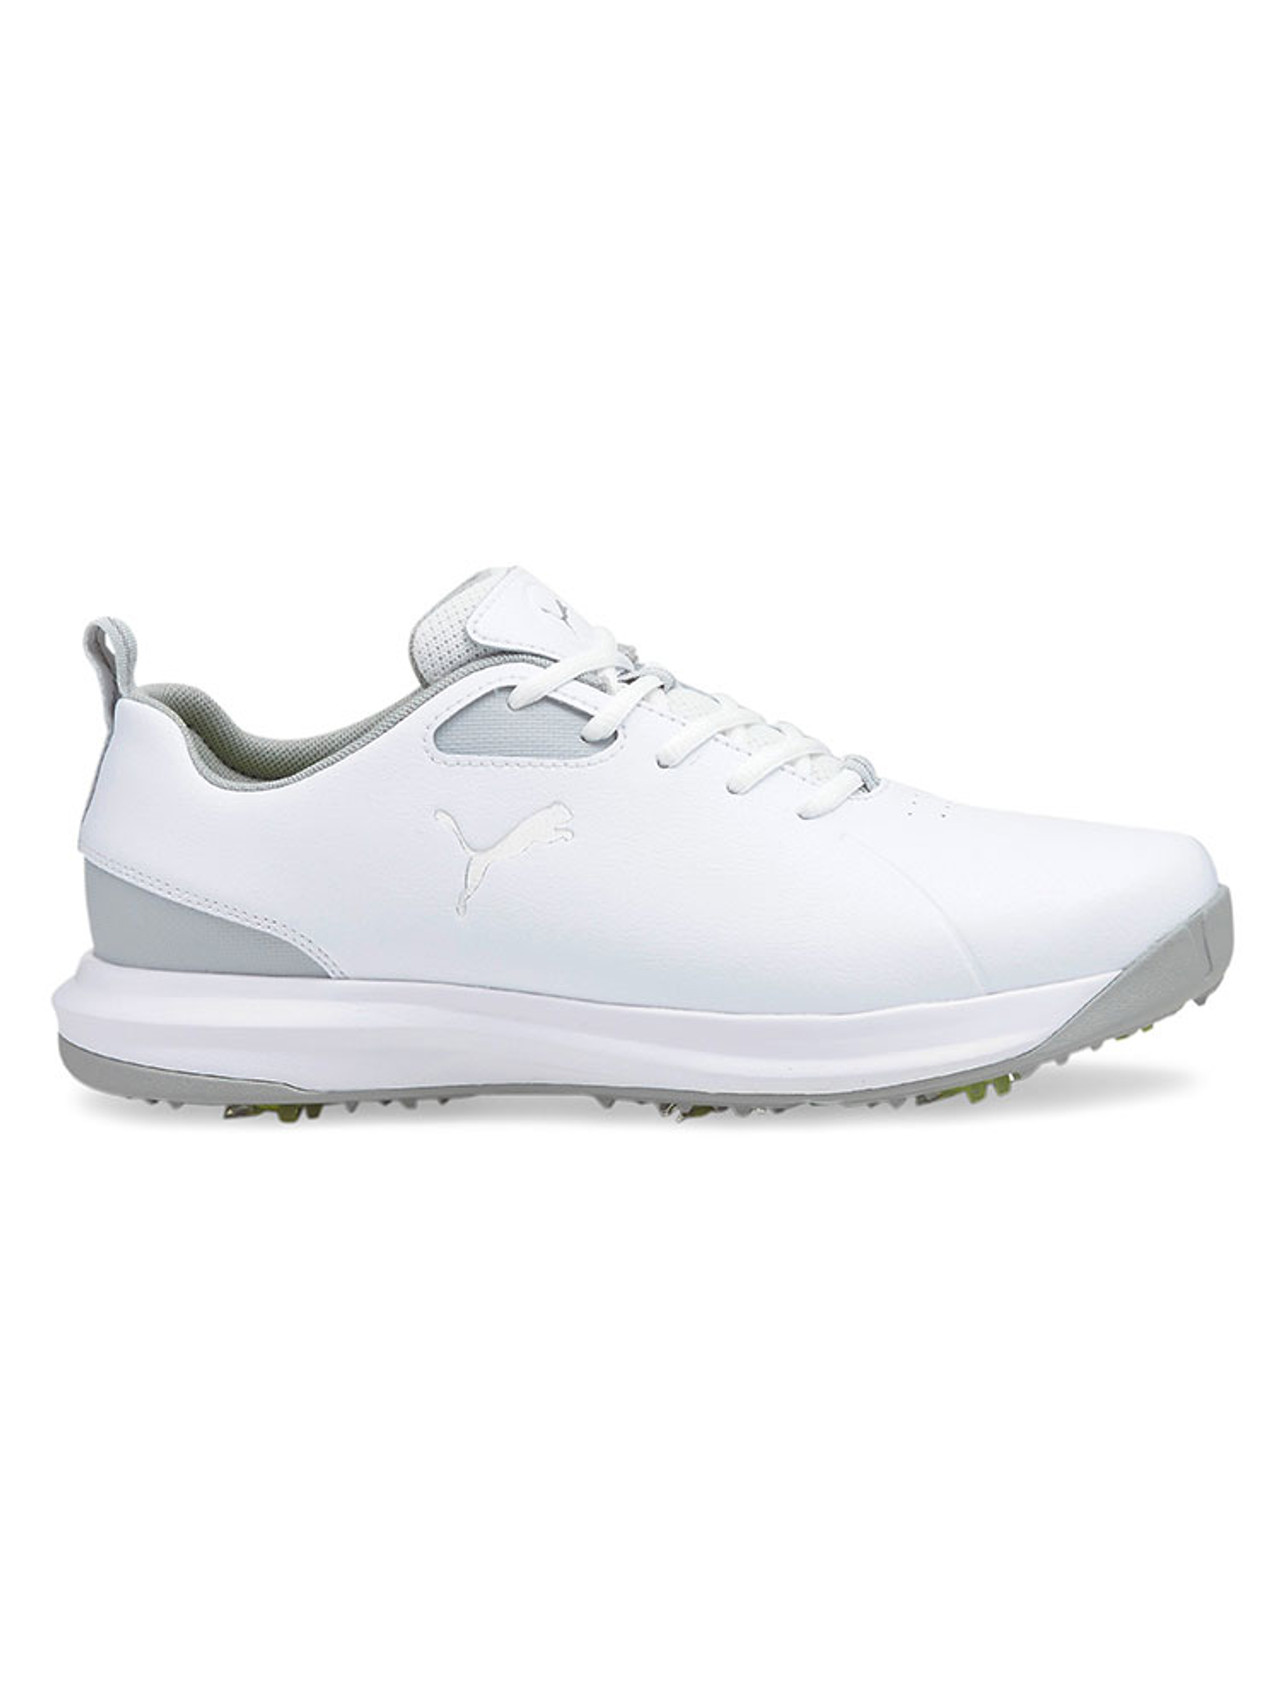 Puma FUSION FX Wide Golf Shoes - Puma White/Puma Silver/High Rise ...